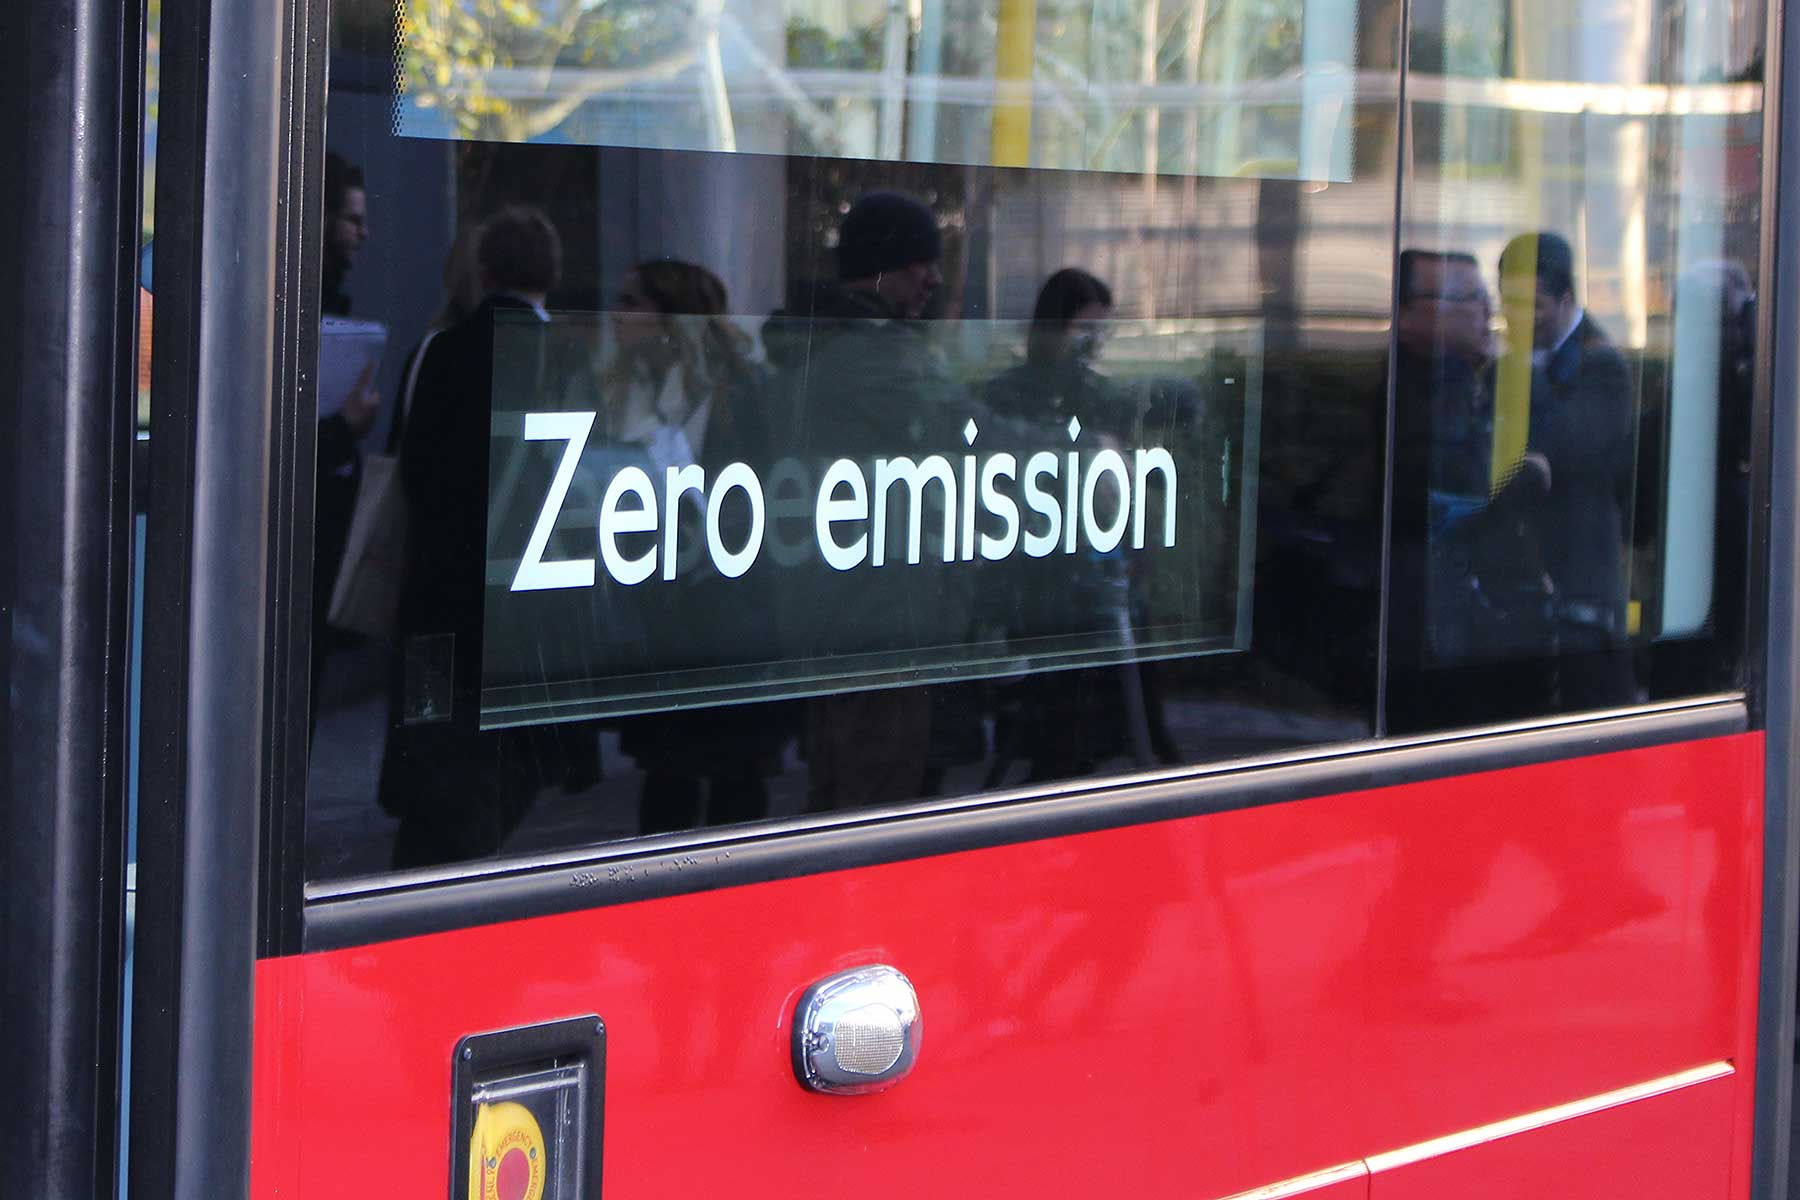 Zero emission London bus